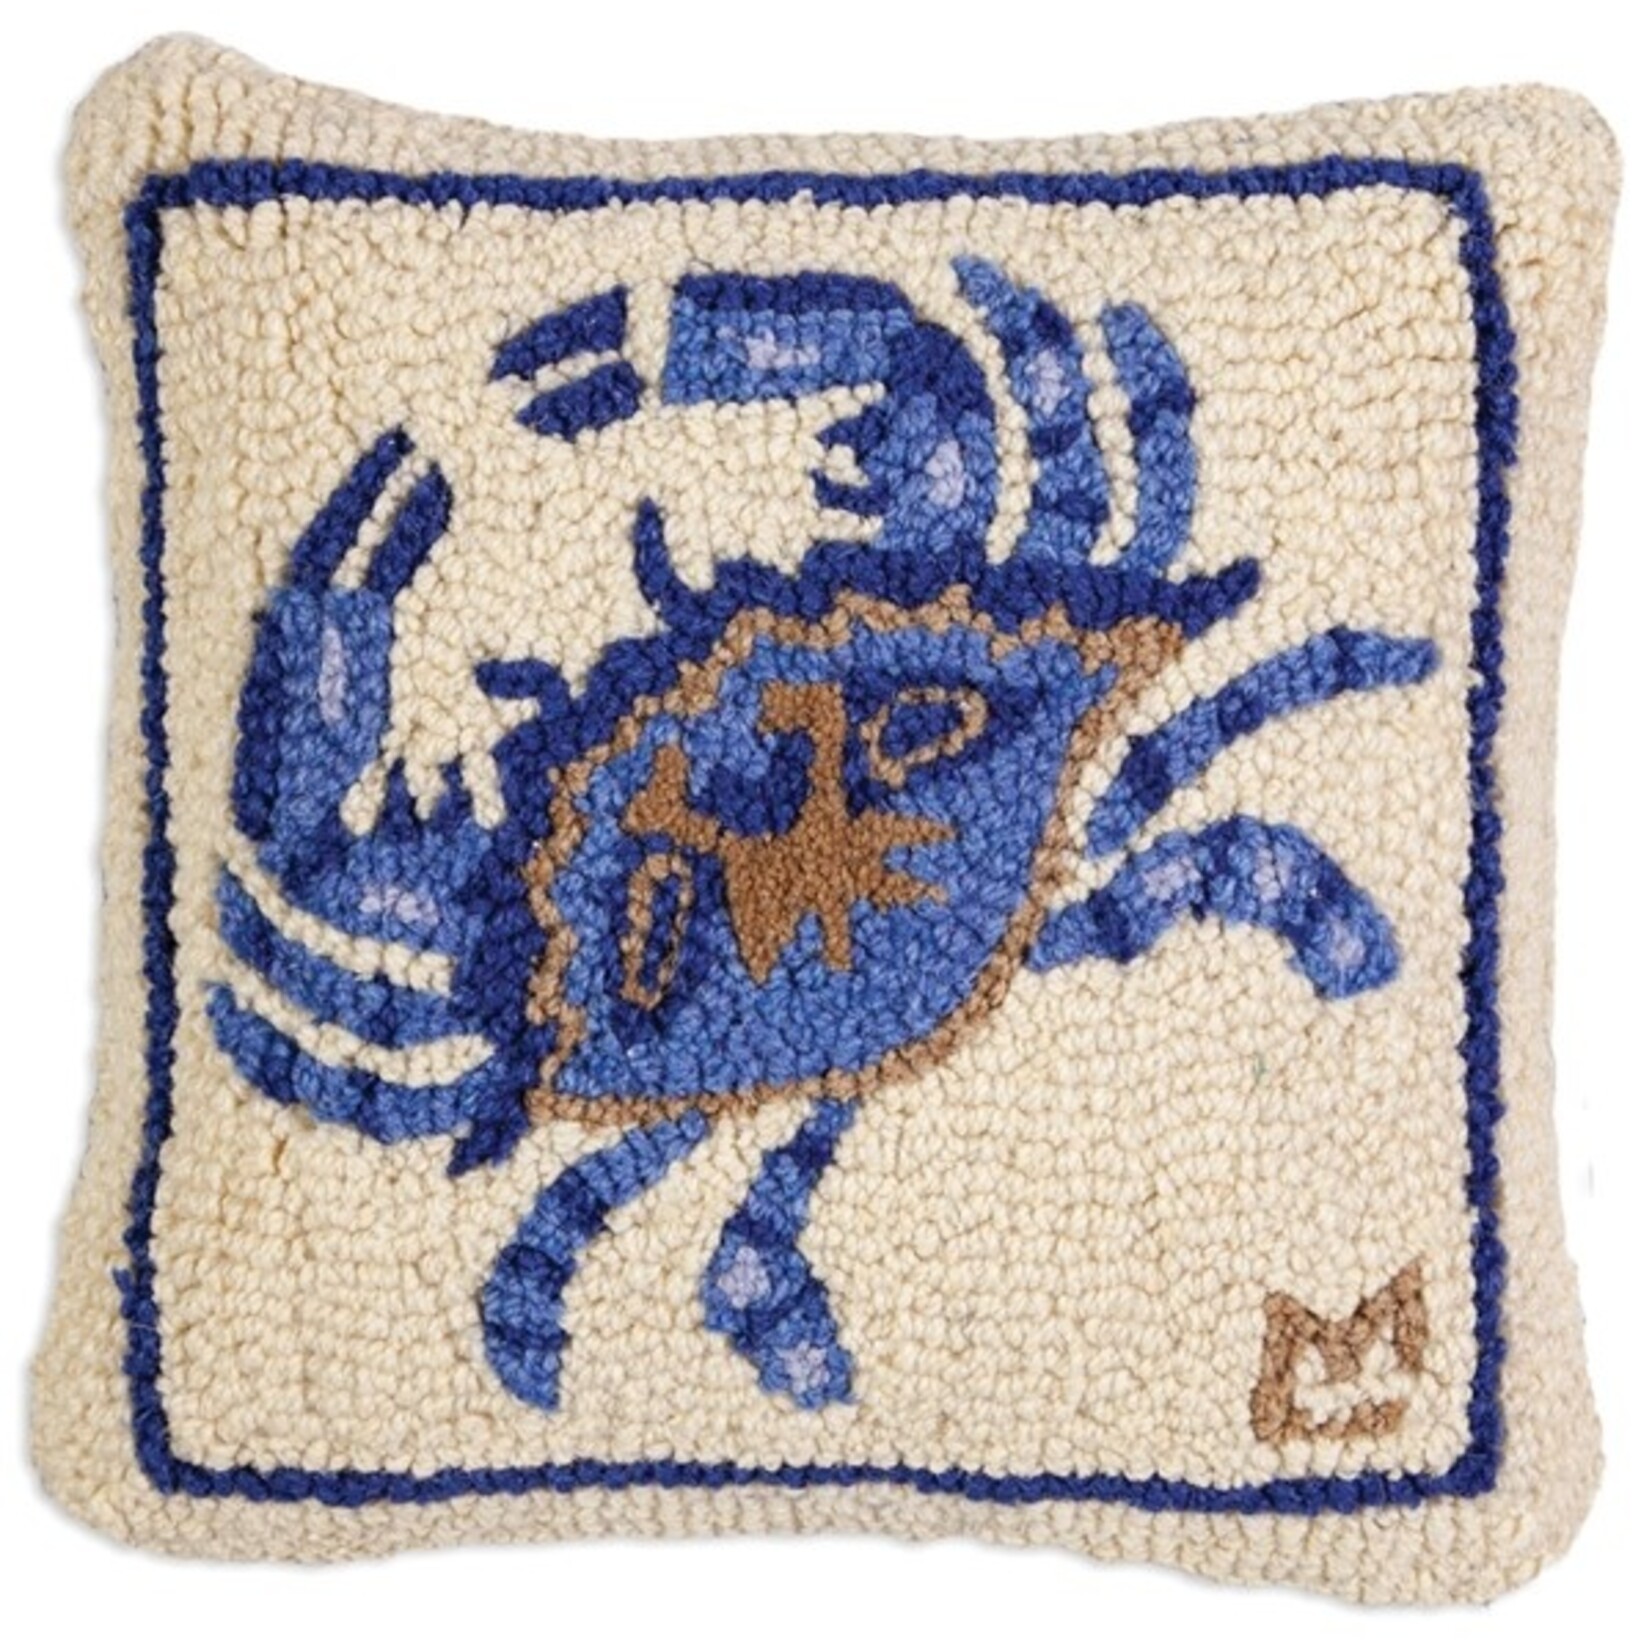 Chandler 4 Corners Blue Crab - Hooked Wool Pillow